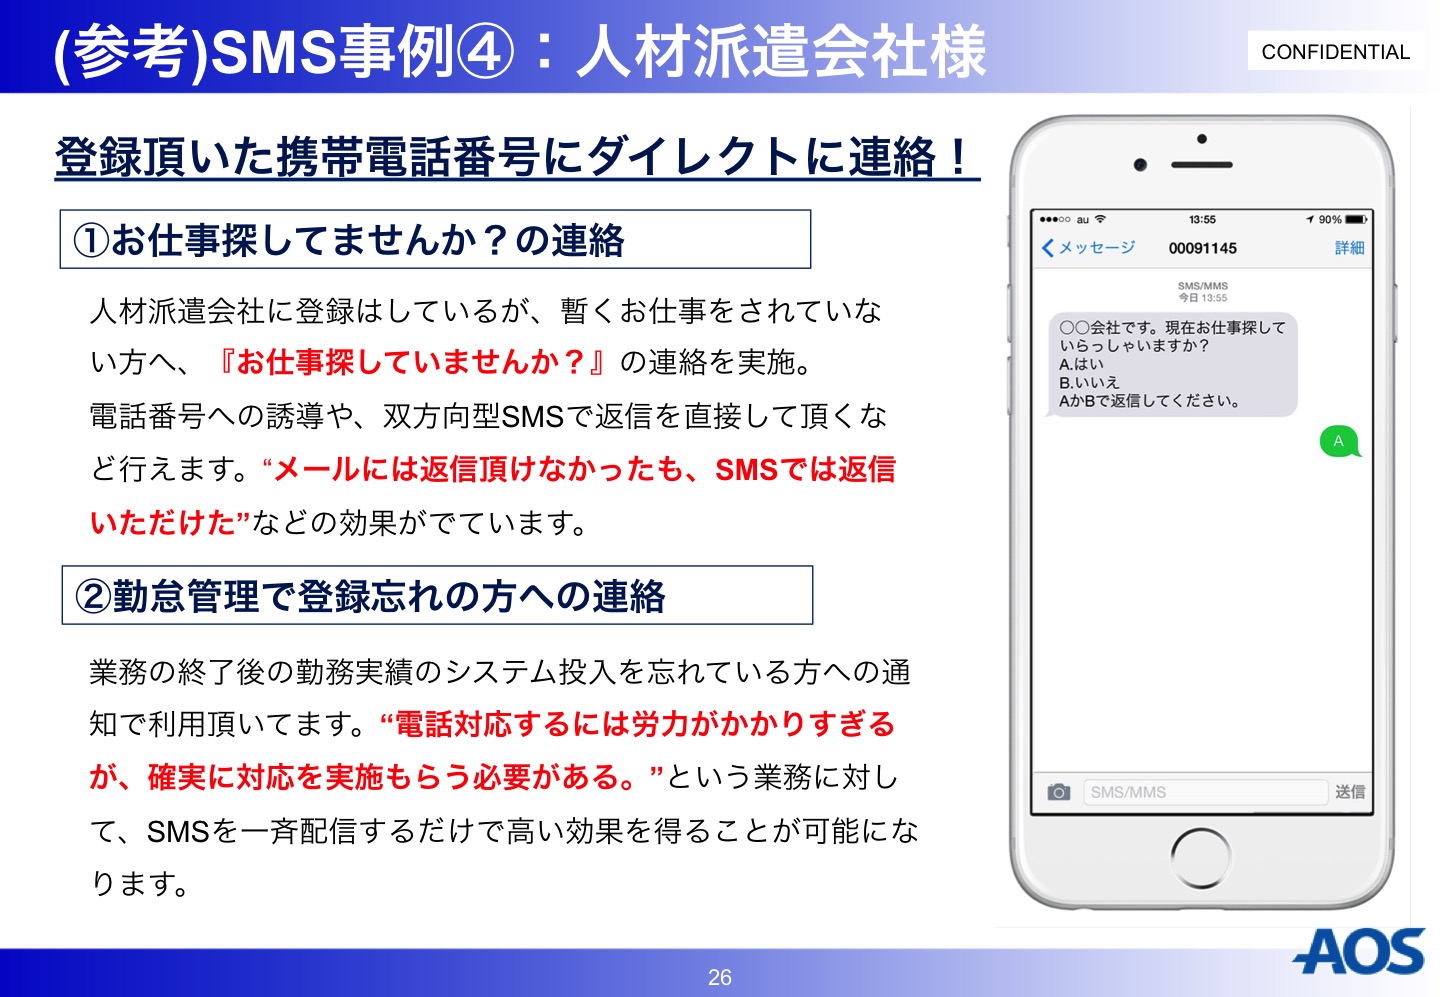 AOS SMS事例 人材派遣会社